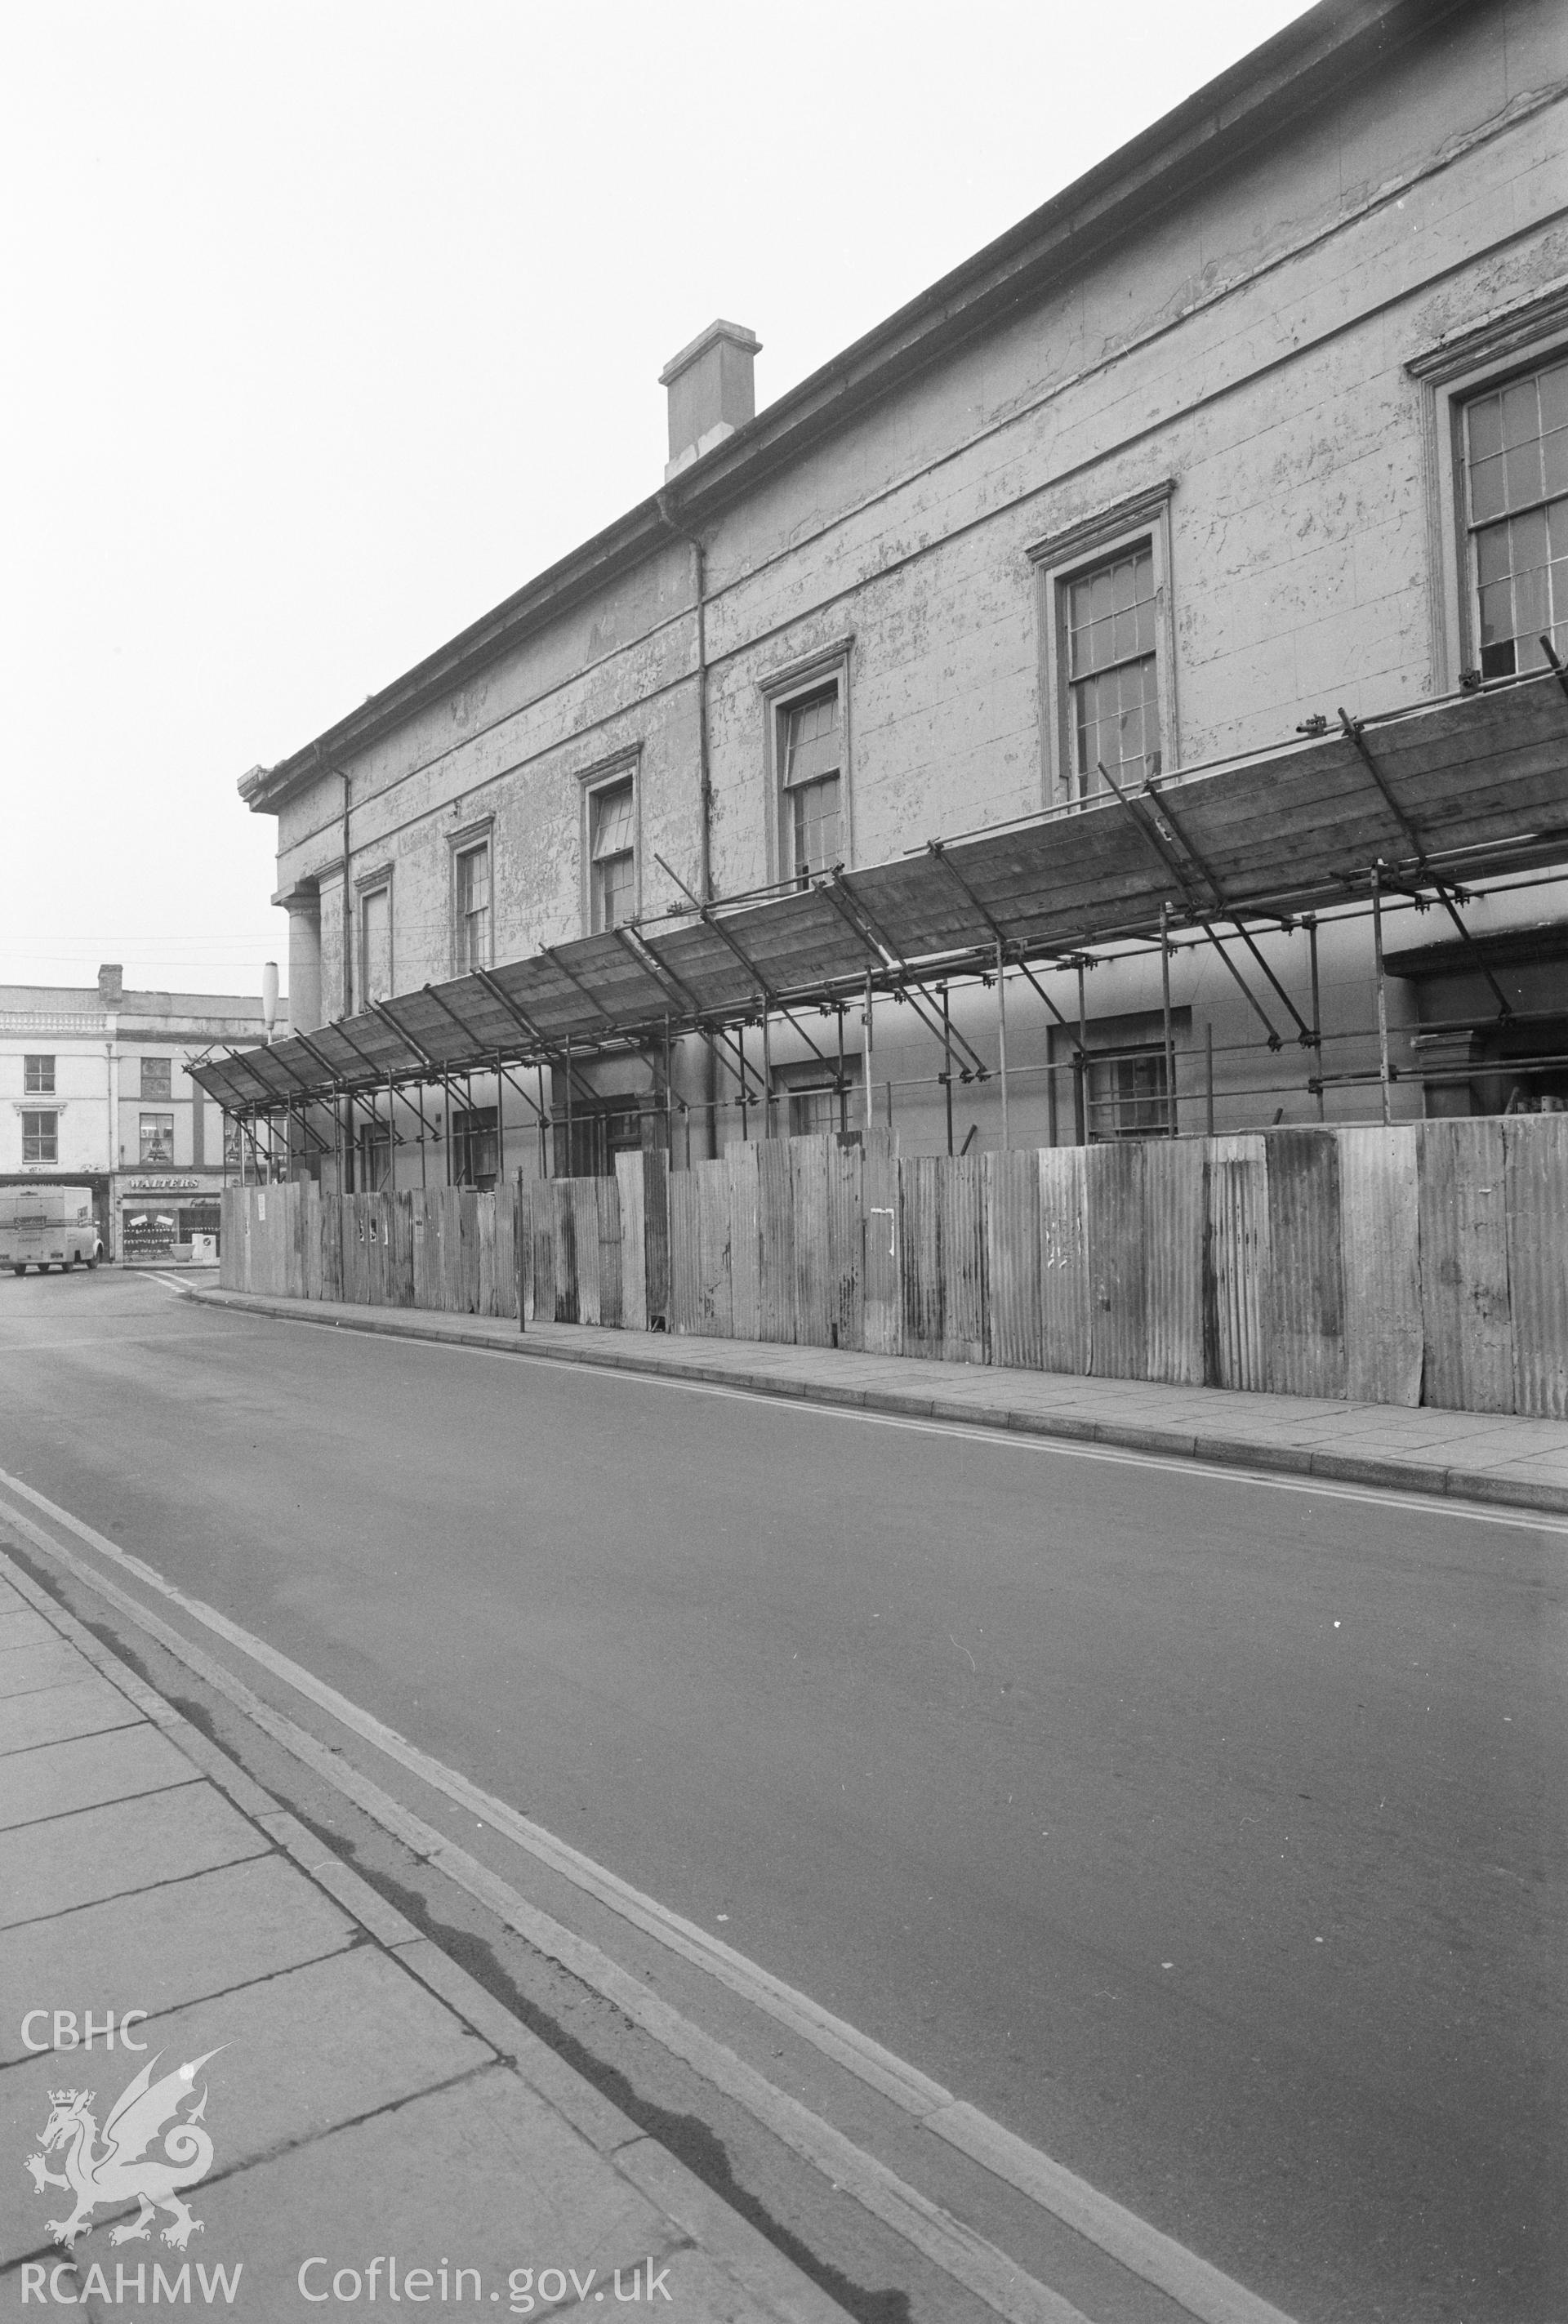 Digital copy of a black and white negative showing street scene in Bridgend.